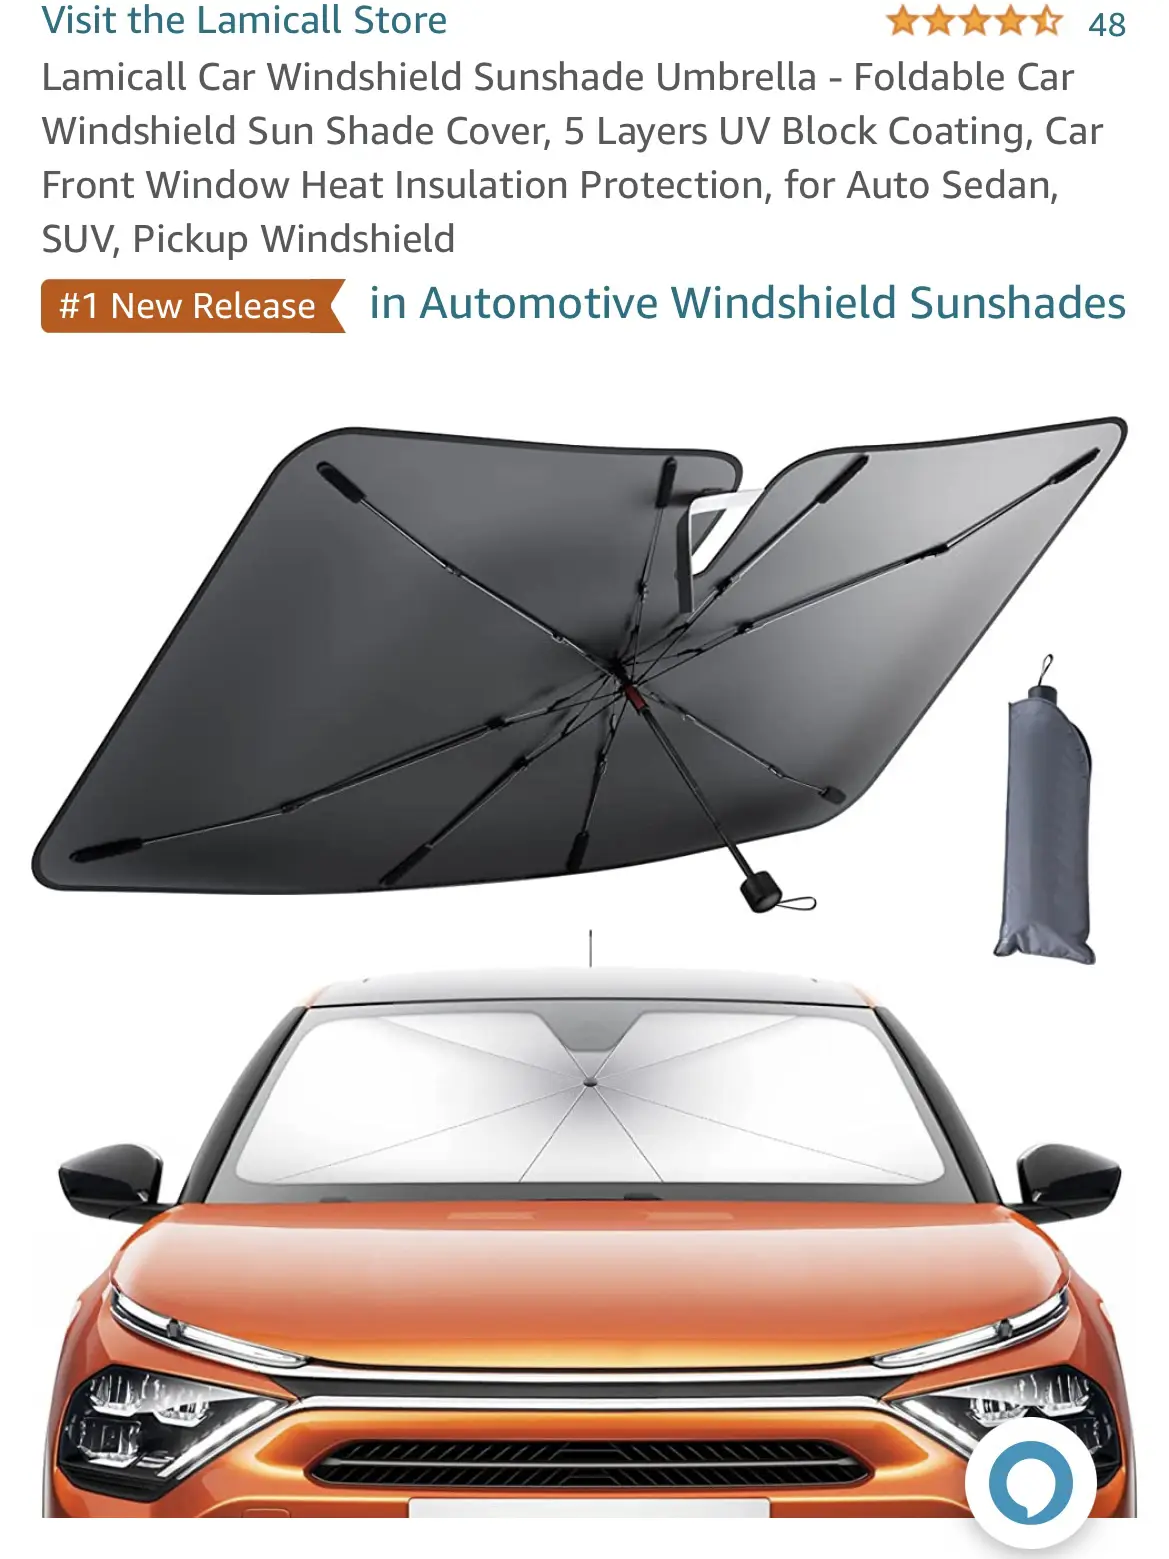 windshield sunshades - Lemon8 Search